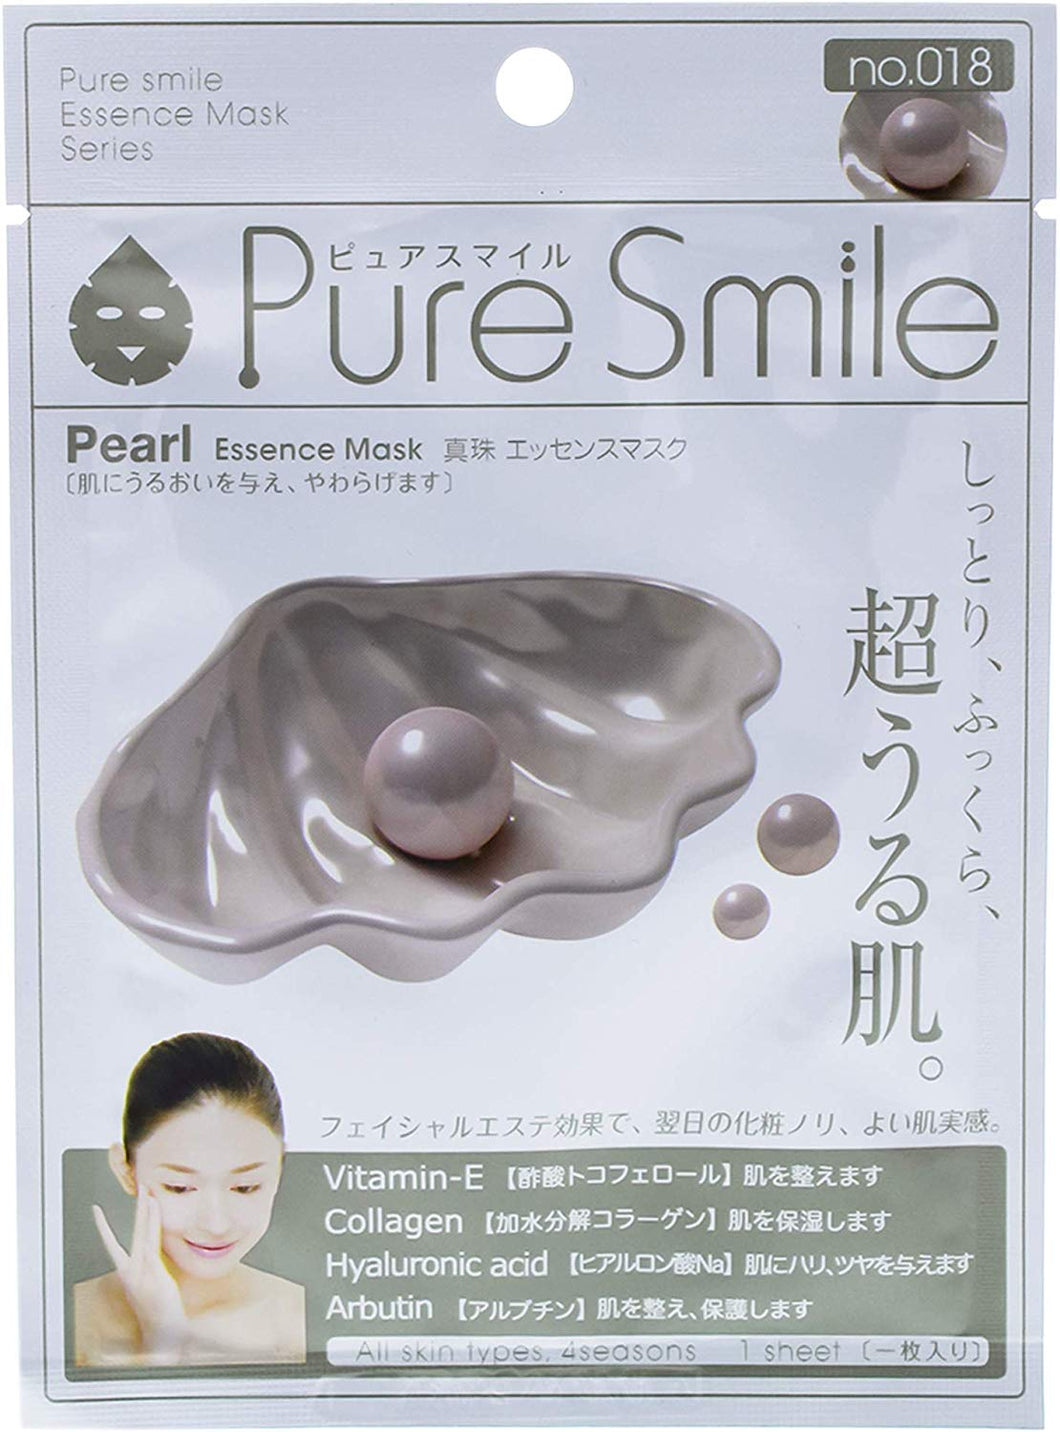 Pure smile Essence Mask (Pearl)